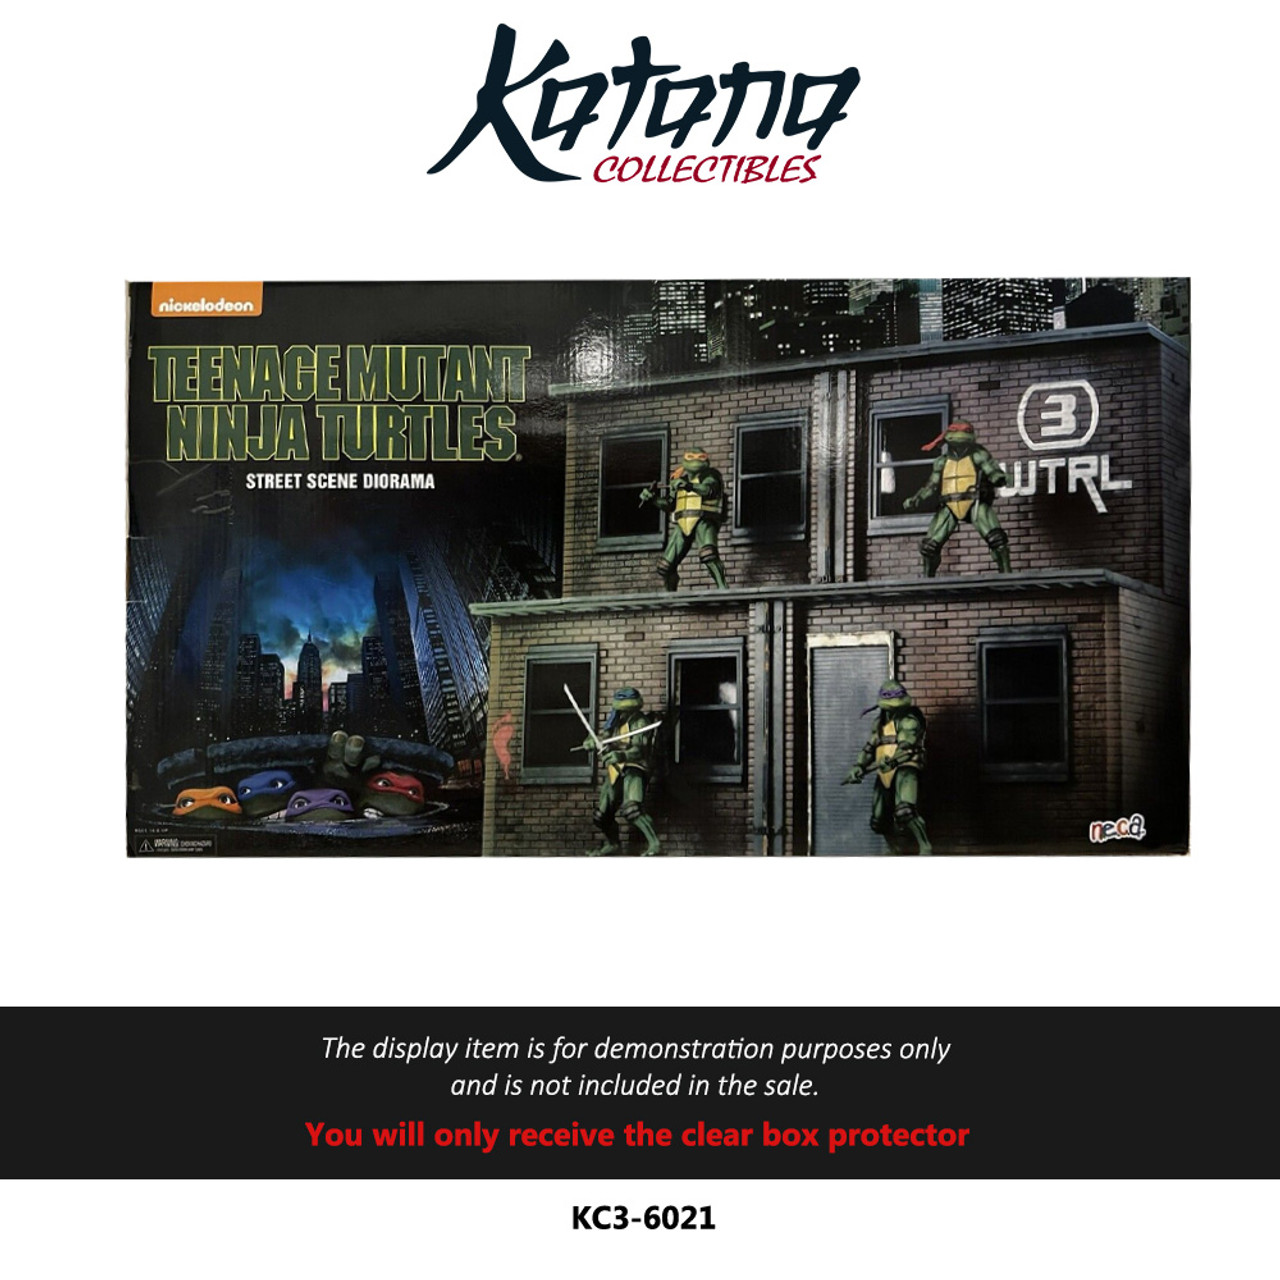 Katana Collectibles Protector For TMNT Street Scene Diorama